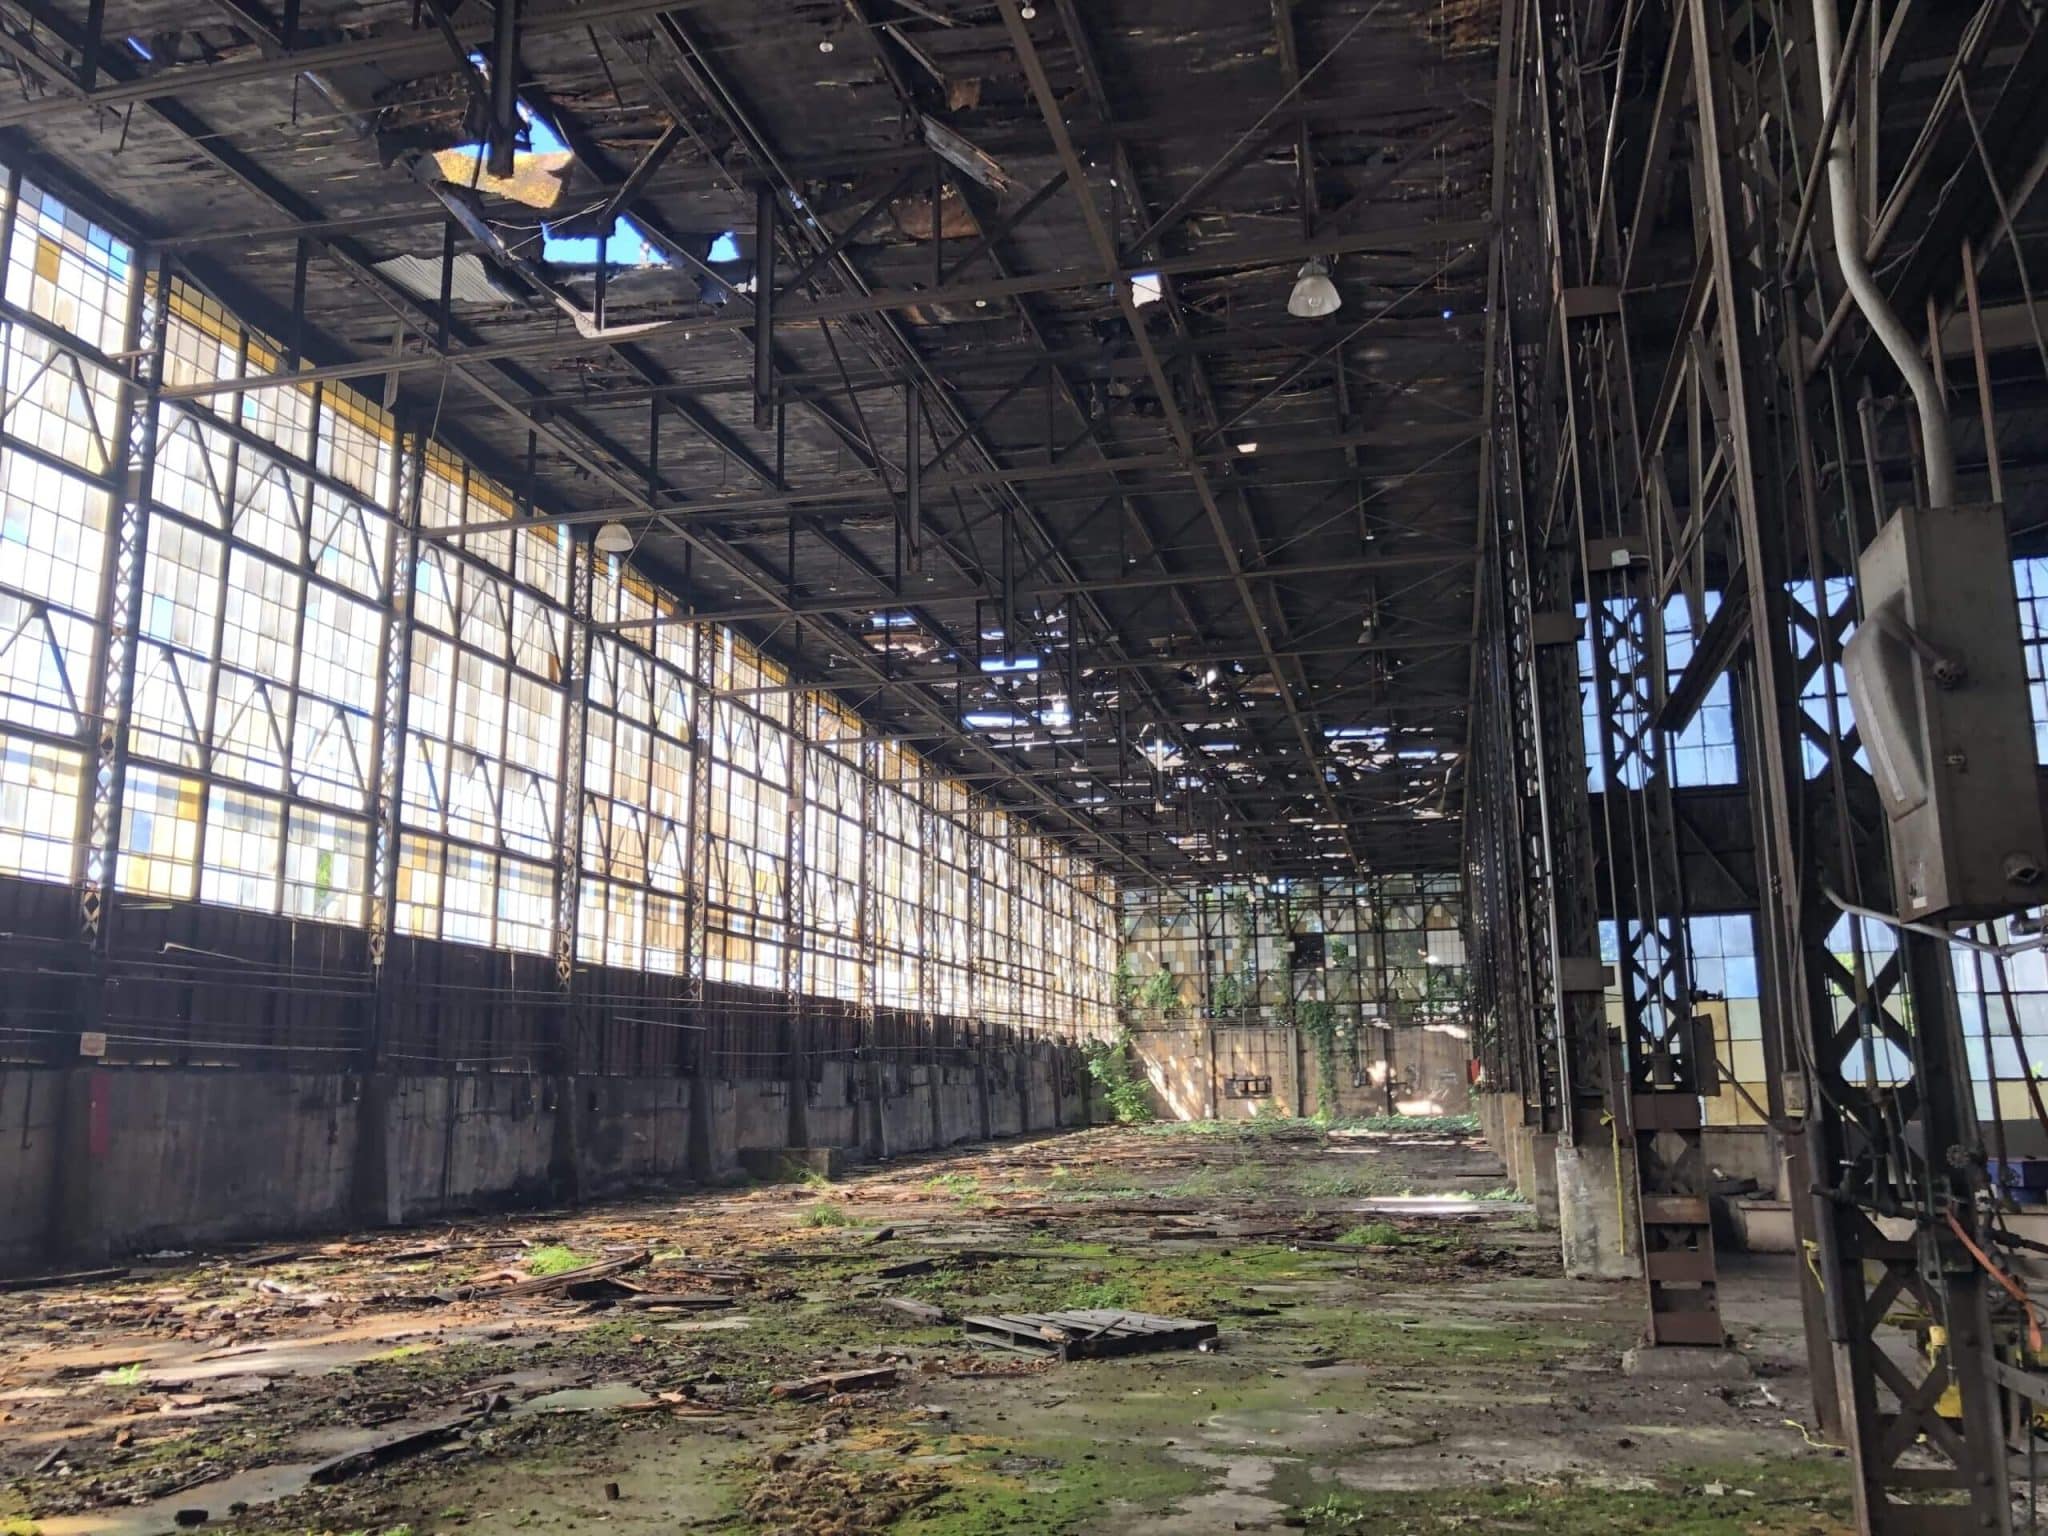 old industrial plant - Caldwell Tank Industrial Site in Newnan, GA